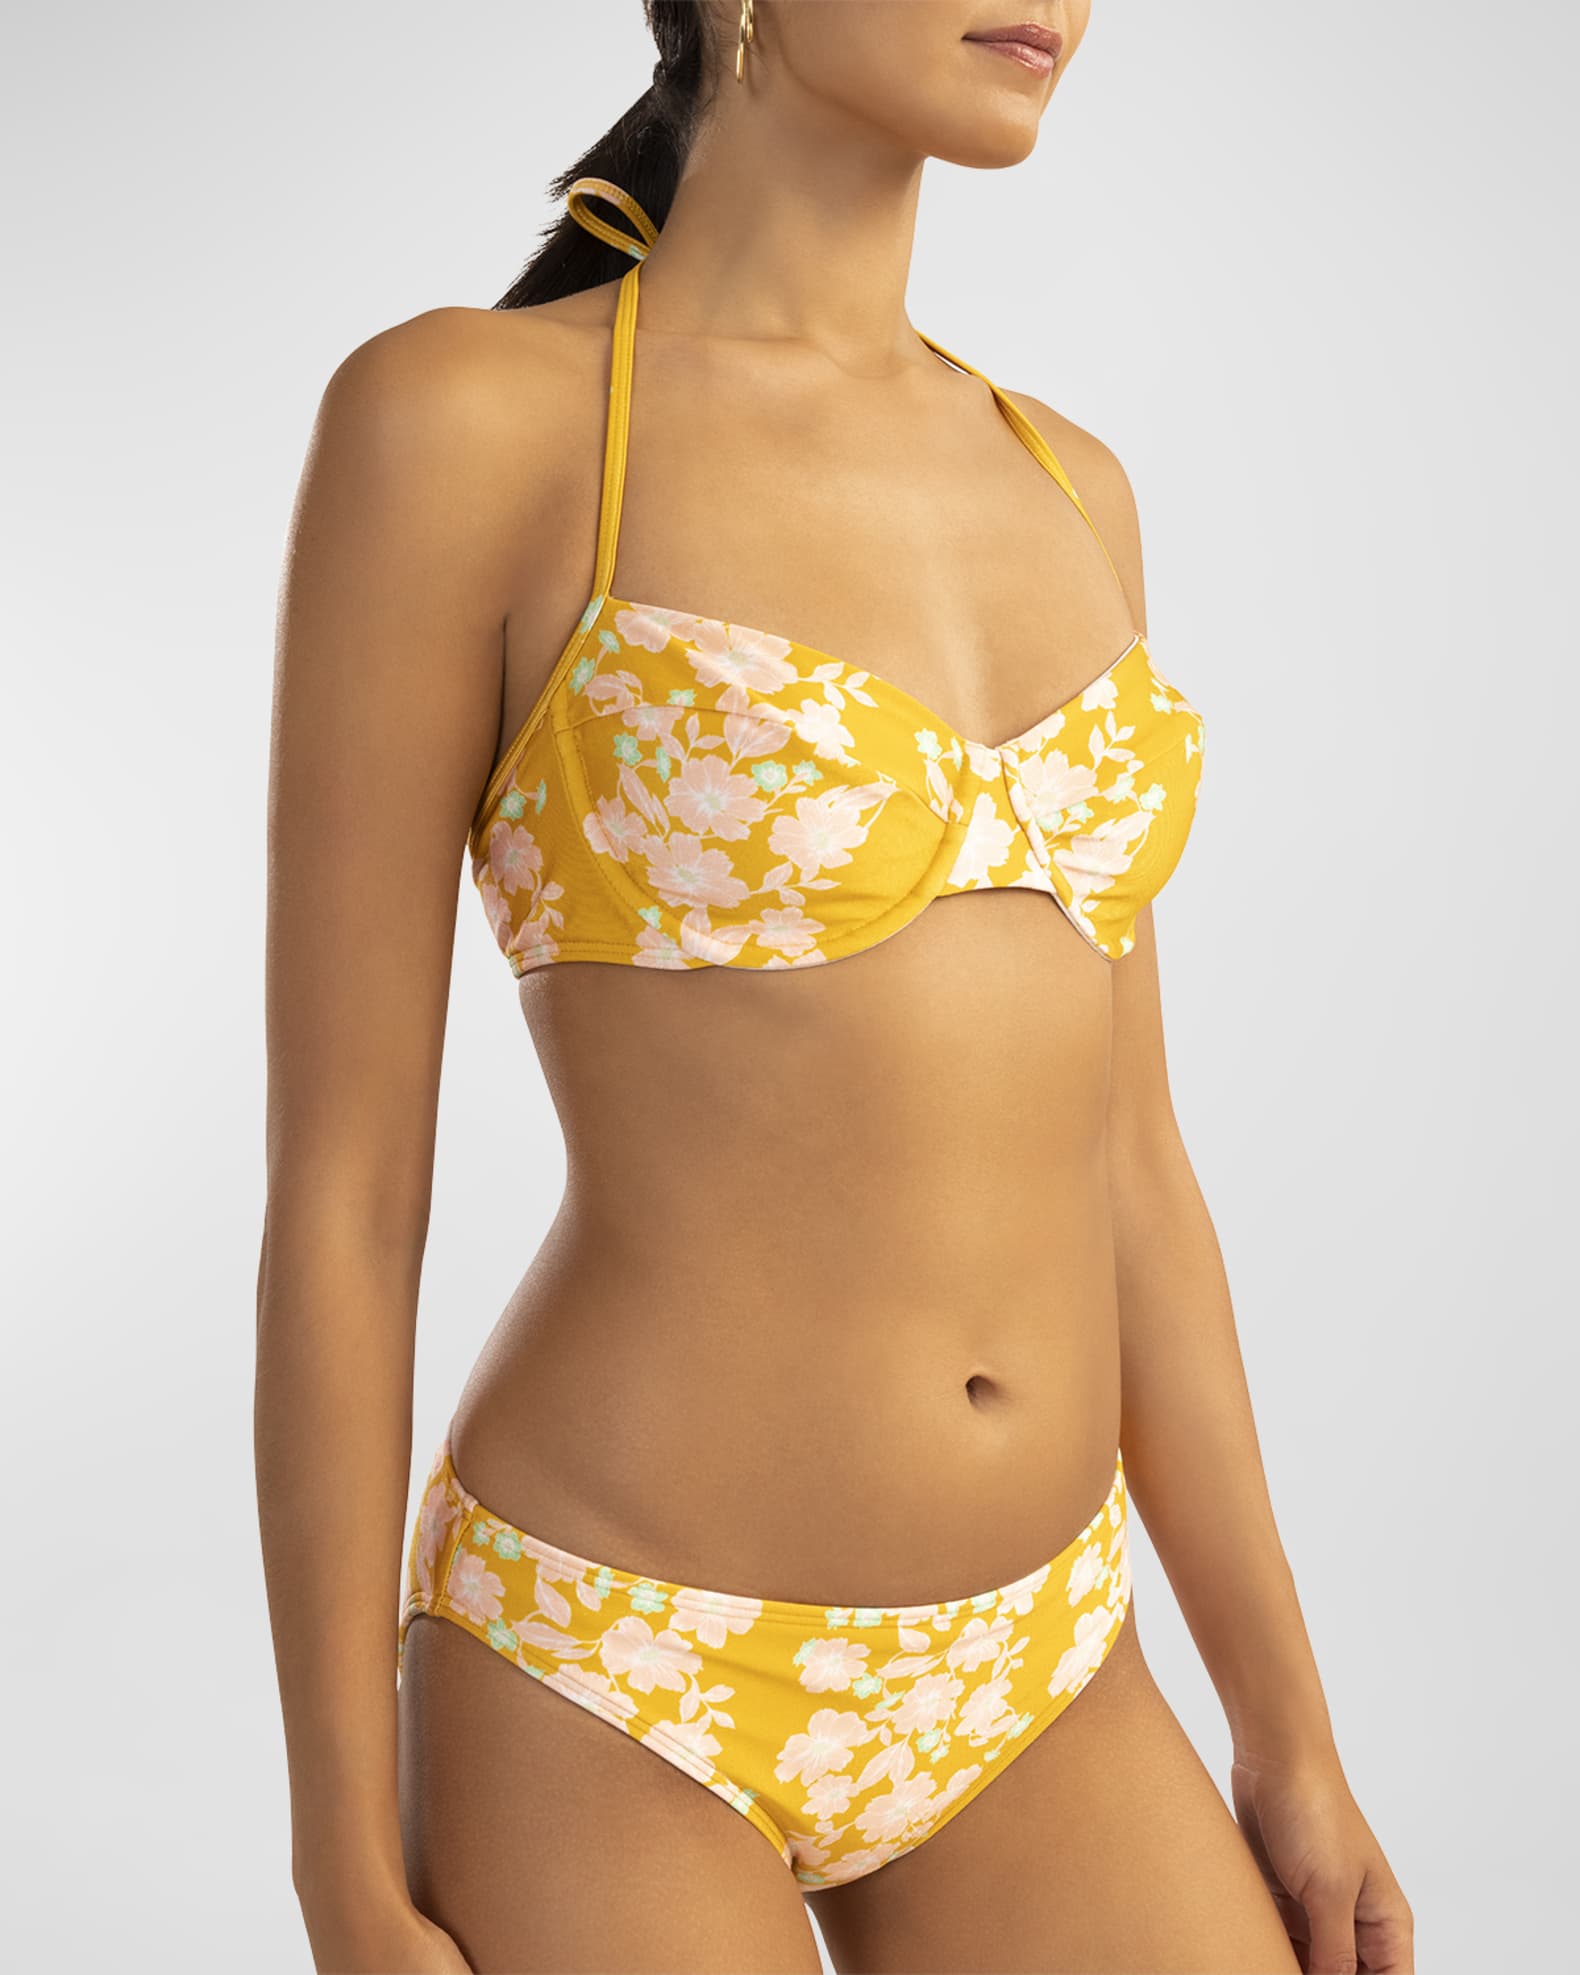 NEW Chanel Signature 2-Piece Top Bottom Bikini Swimsuit Swimwear